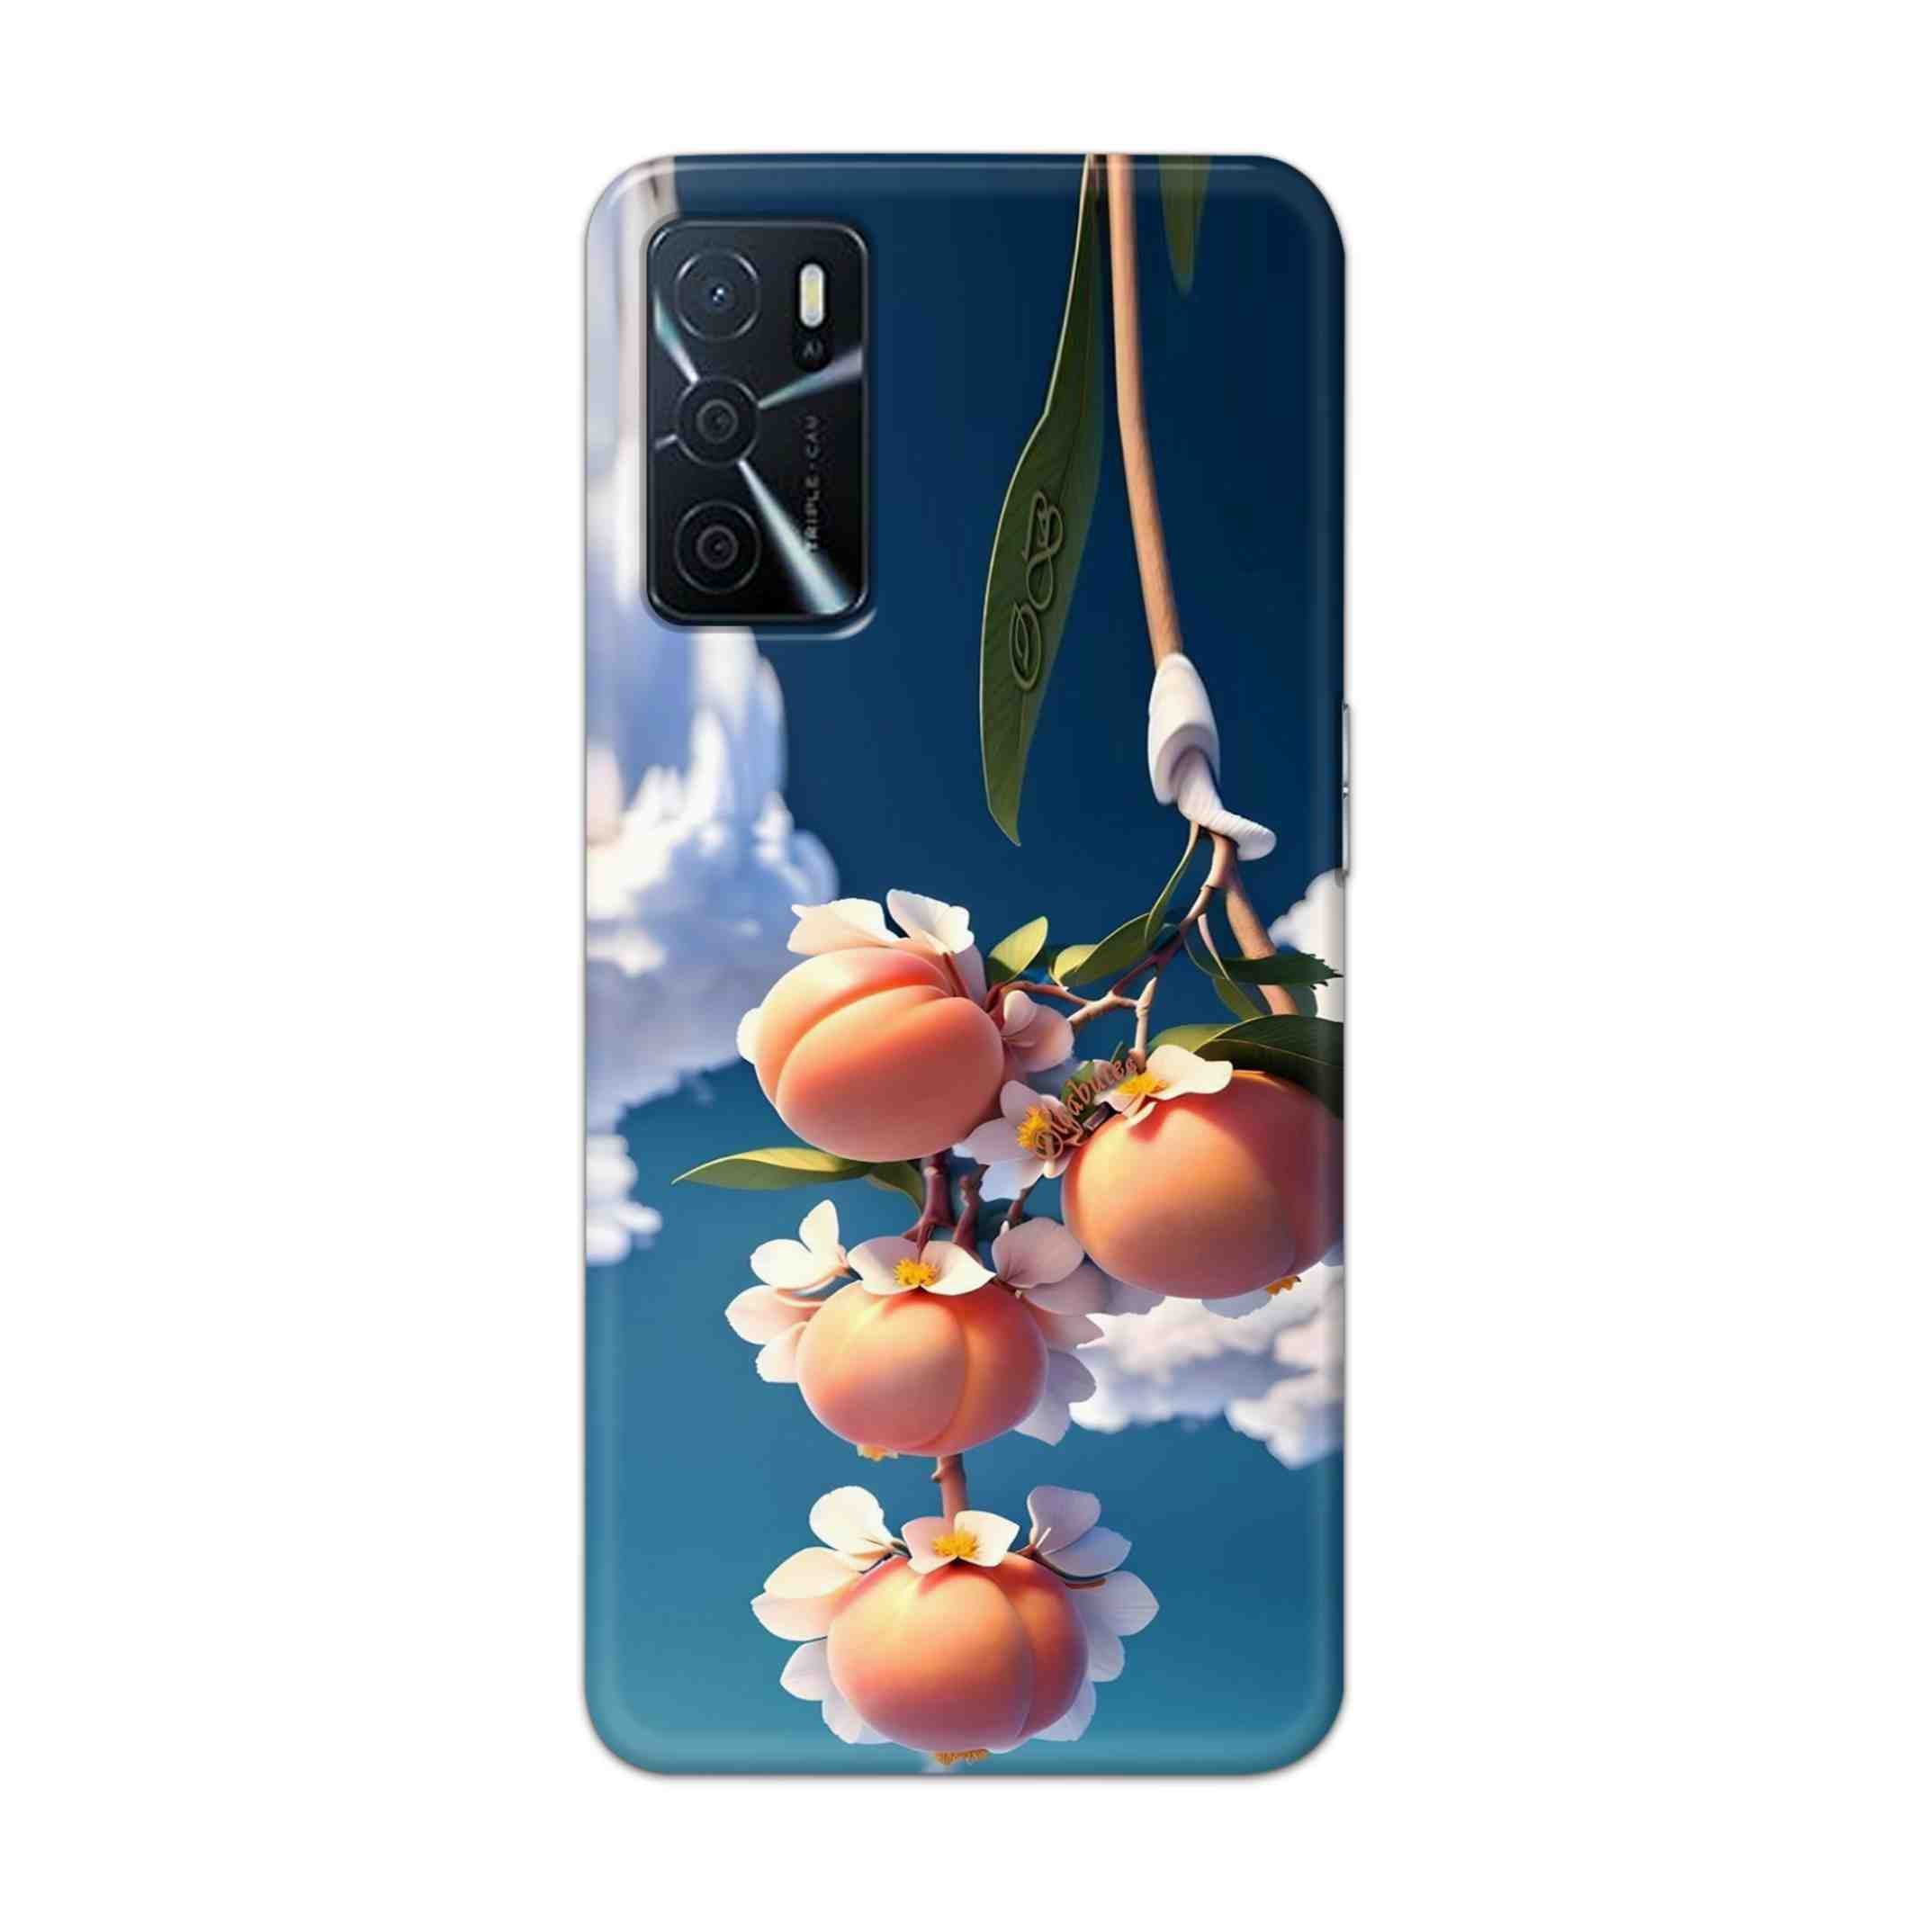 Buy Fruit Hard Back Mobile Phone Case Cover For Oppo A16 Online